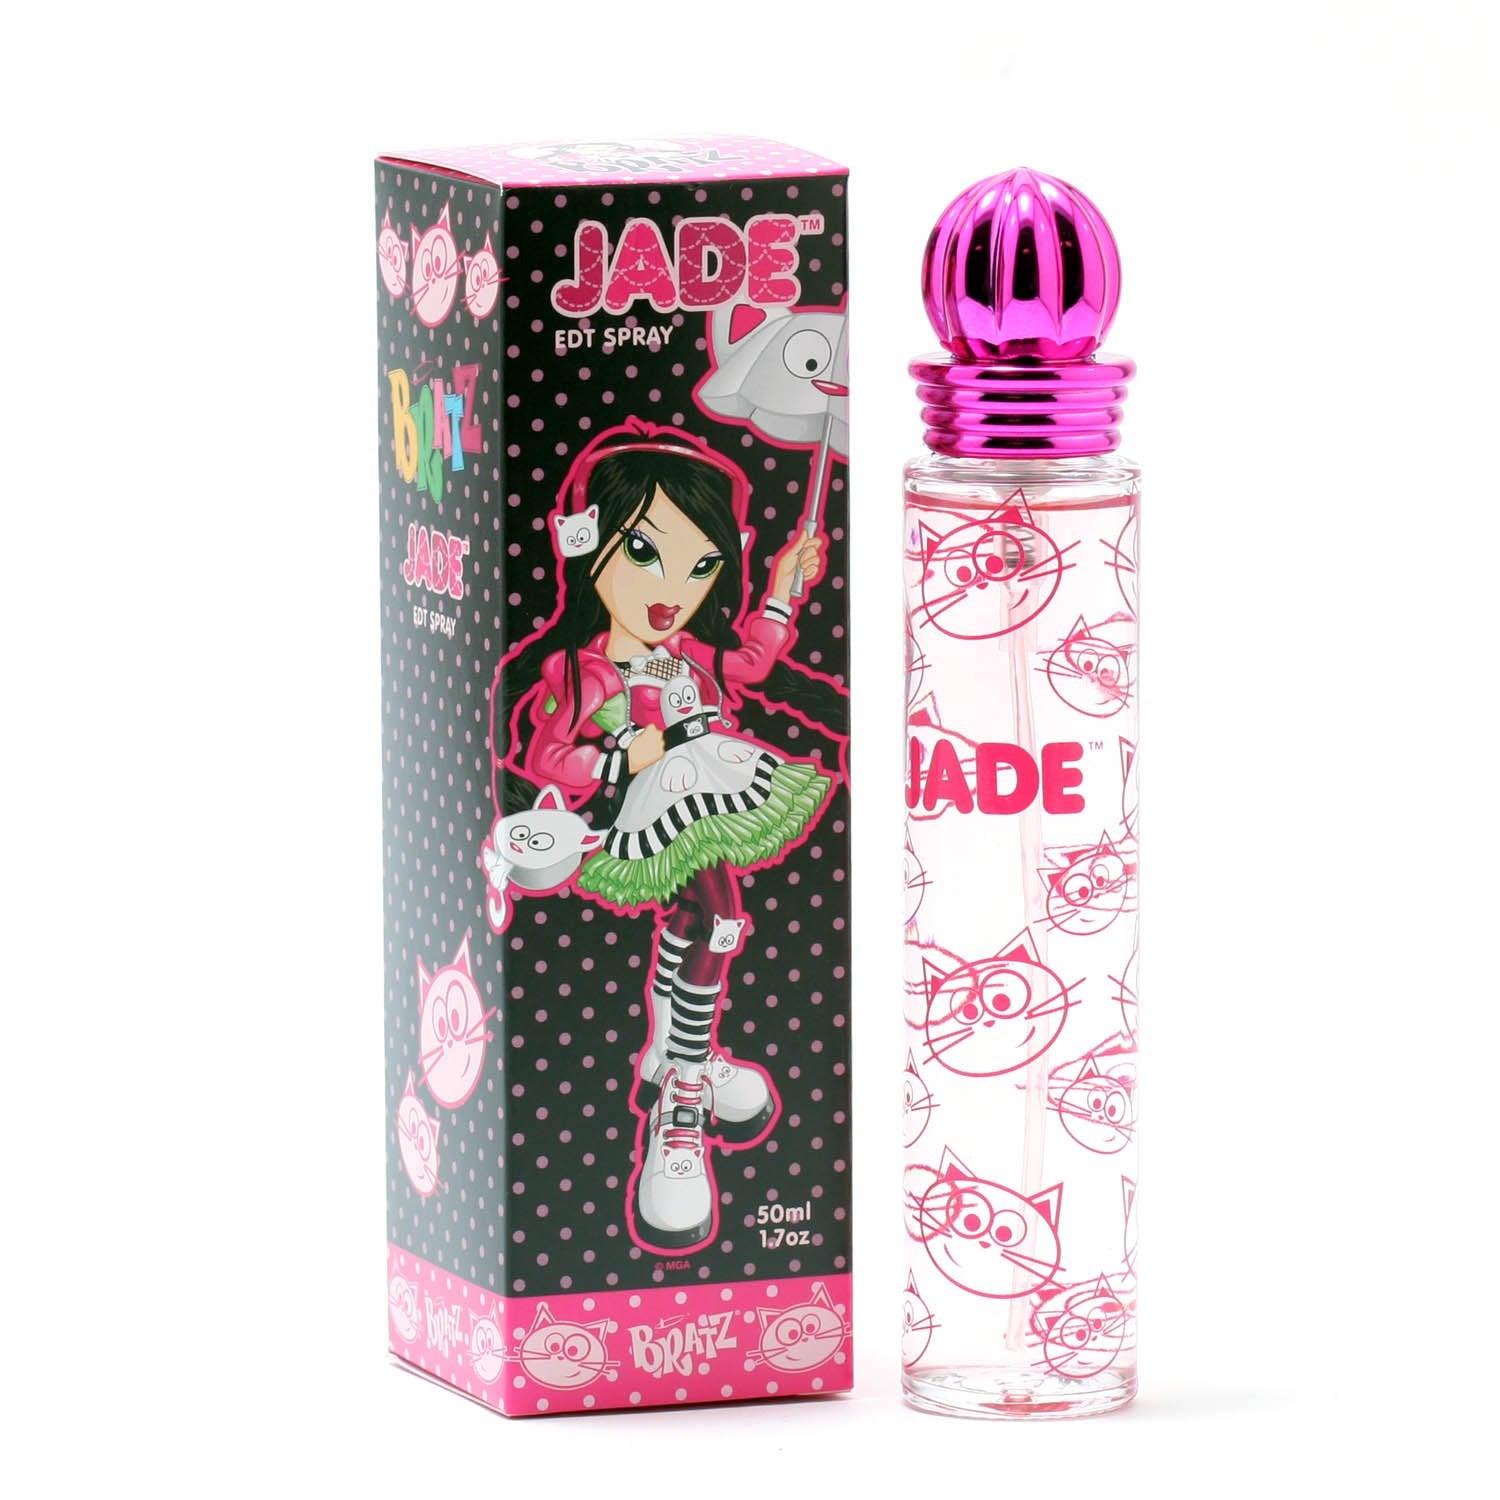 Perfume - BRATZ JADE FOR GIRLS - EAU DE TOILETTE SPRAY, 1.7 OZ